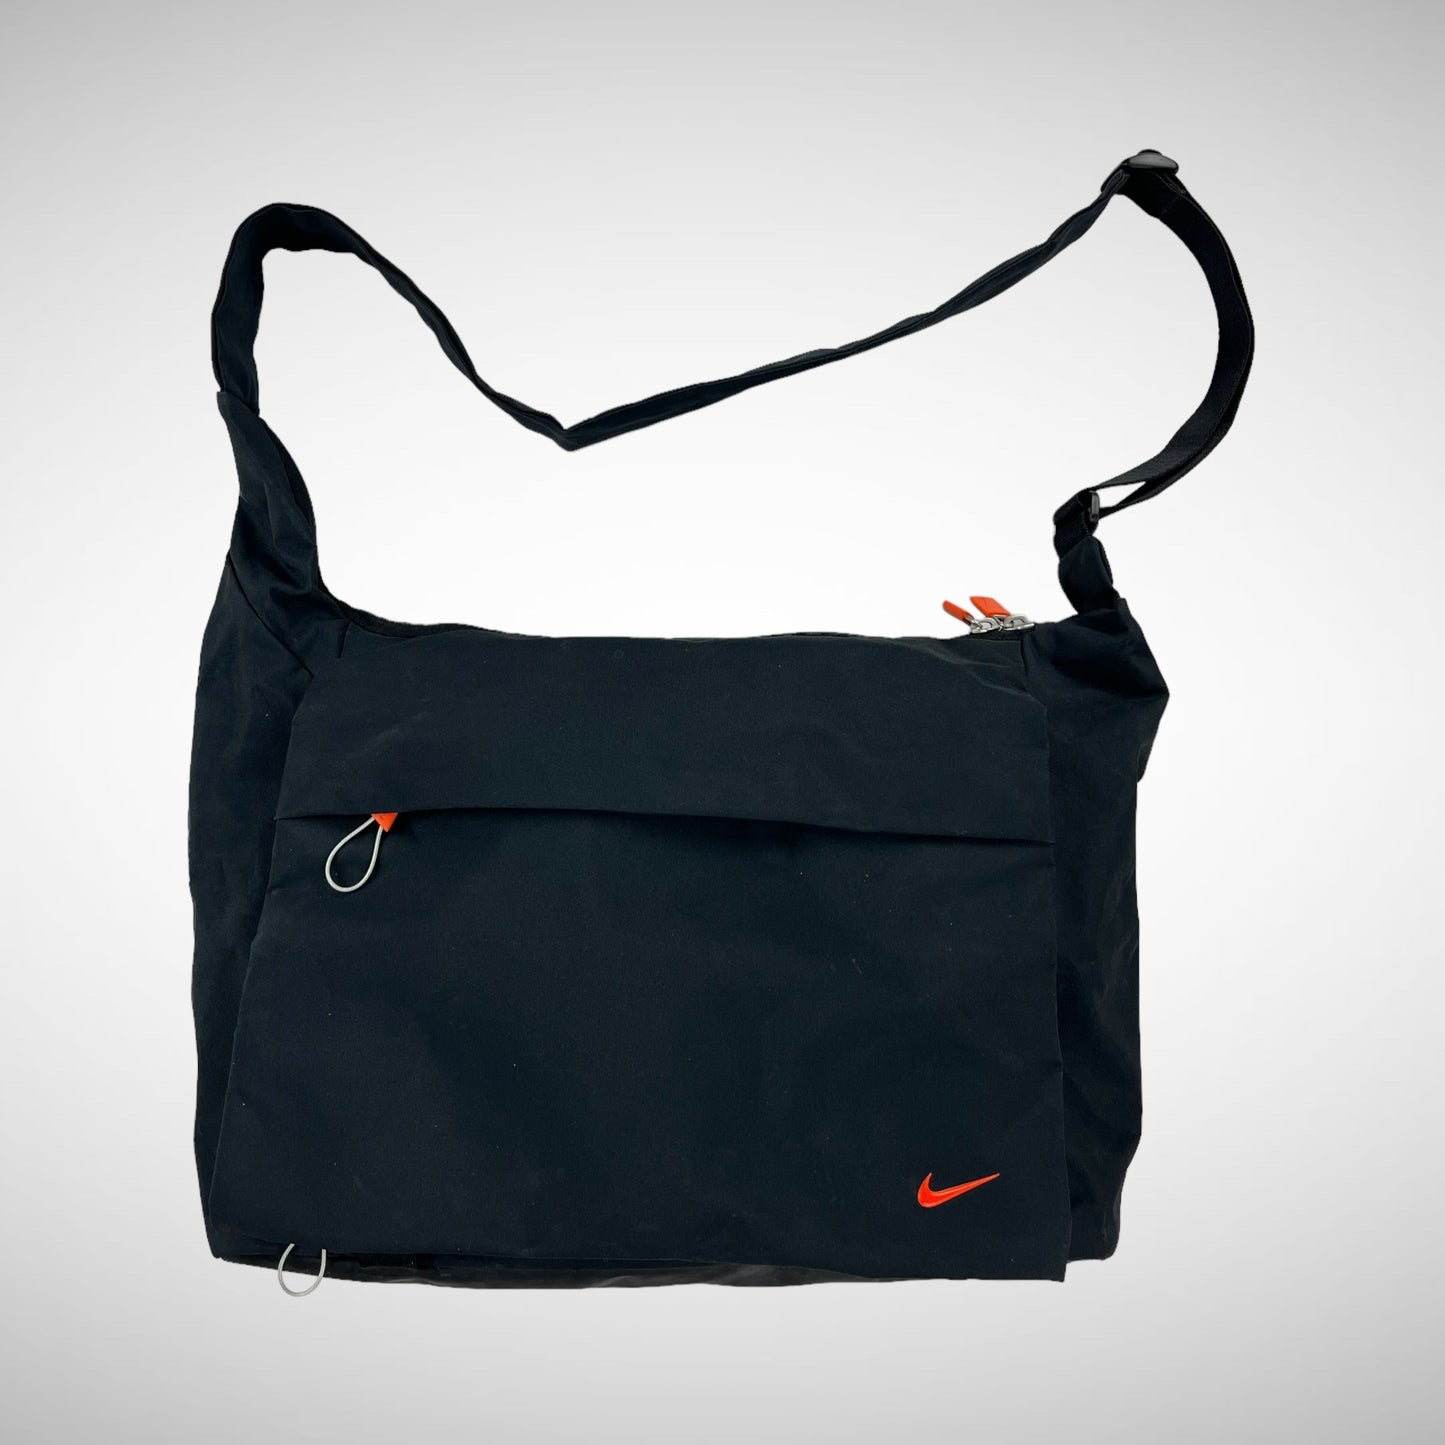 Nike Nylon Shoulderbag (2000s)